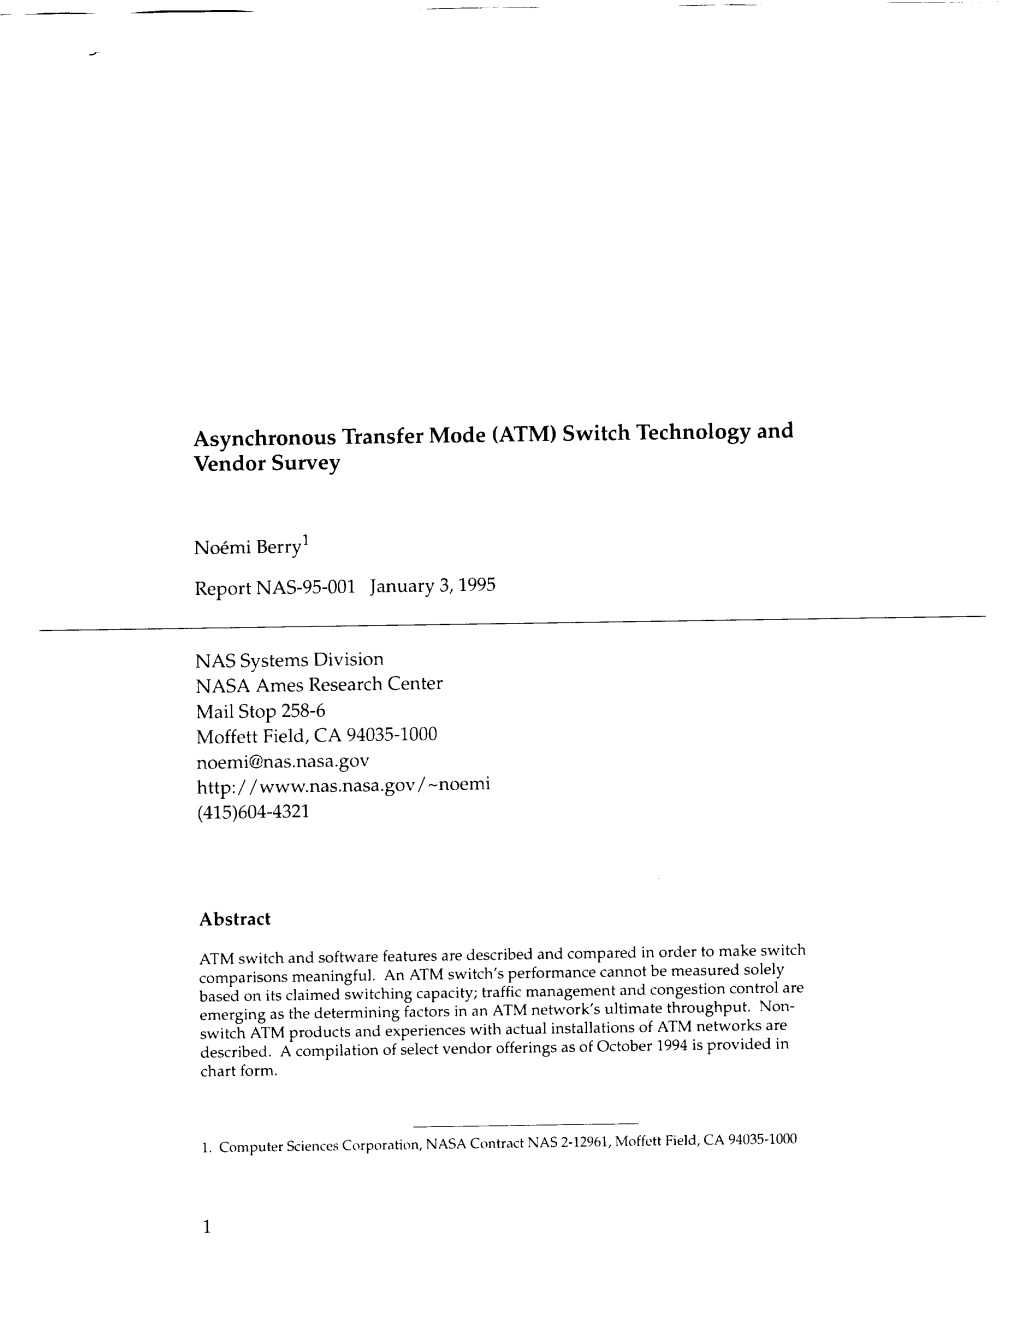 Asynchronous Transfer Mode (ATM) Switch Technology and Vendor Survey No6mi Berry 1 Report NAS-95-001 January 3, 1995 NAS Systems